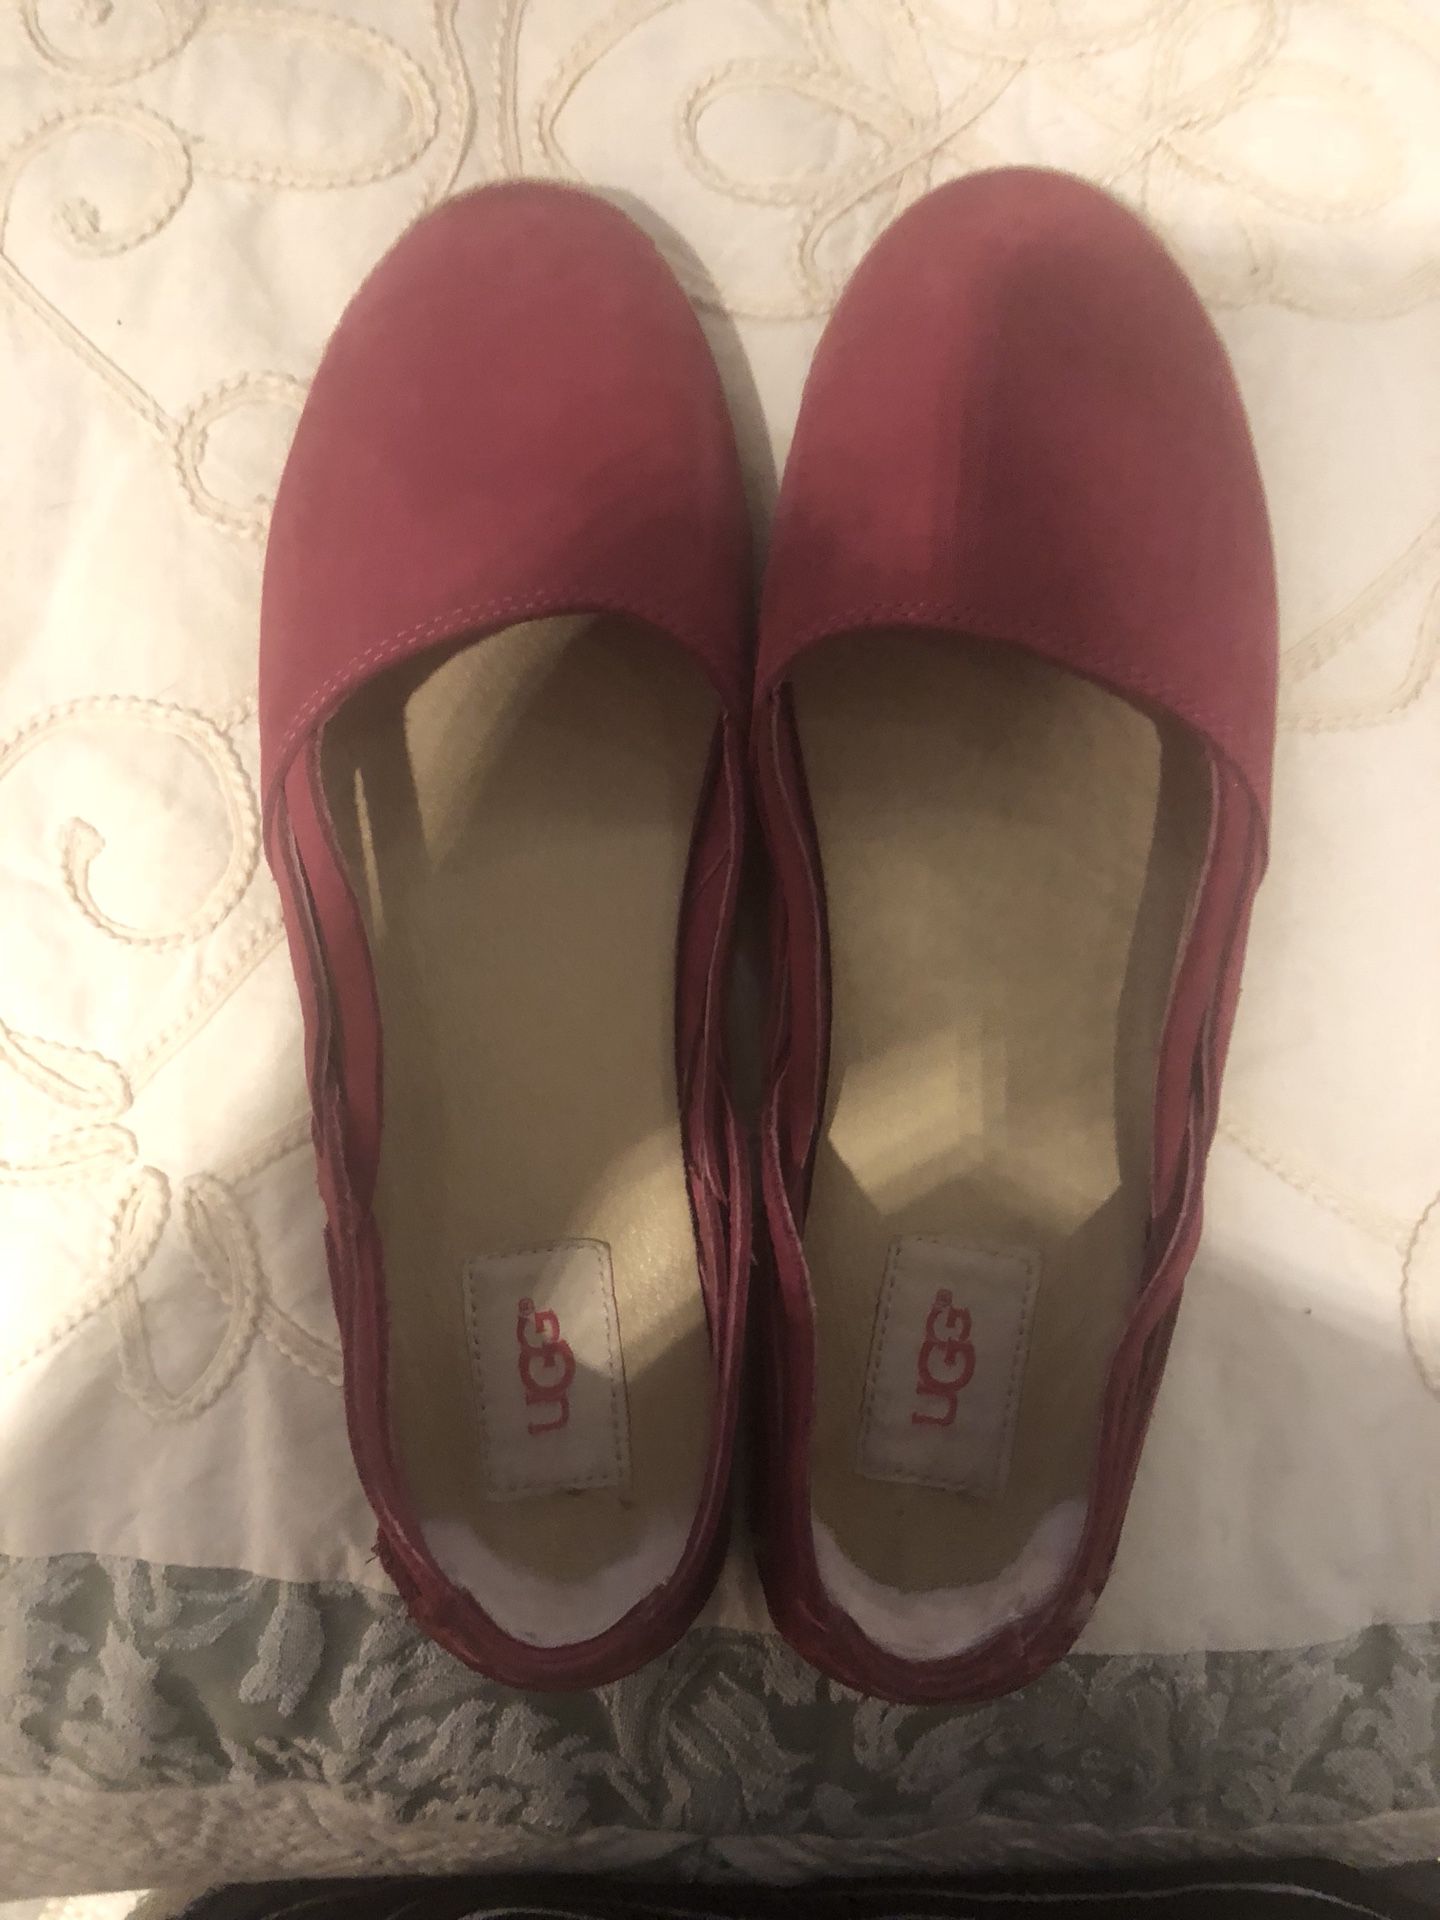 UGG Shoes size 8 1/2